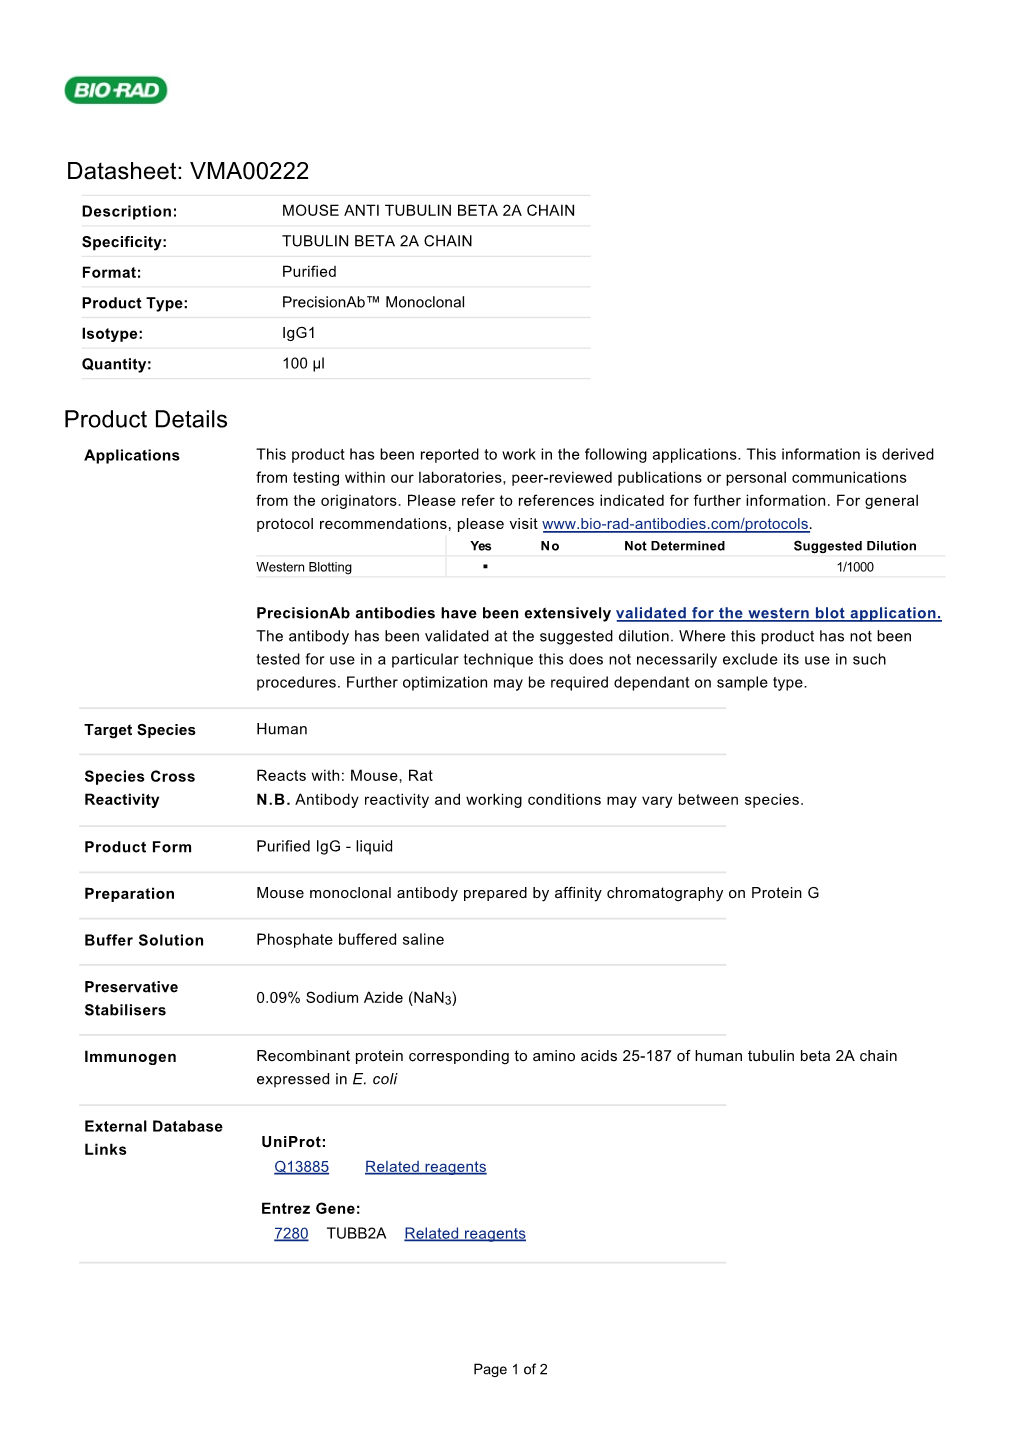 Datasheet: VMA00222 Product Details